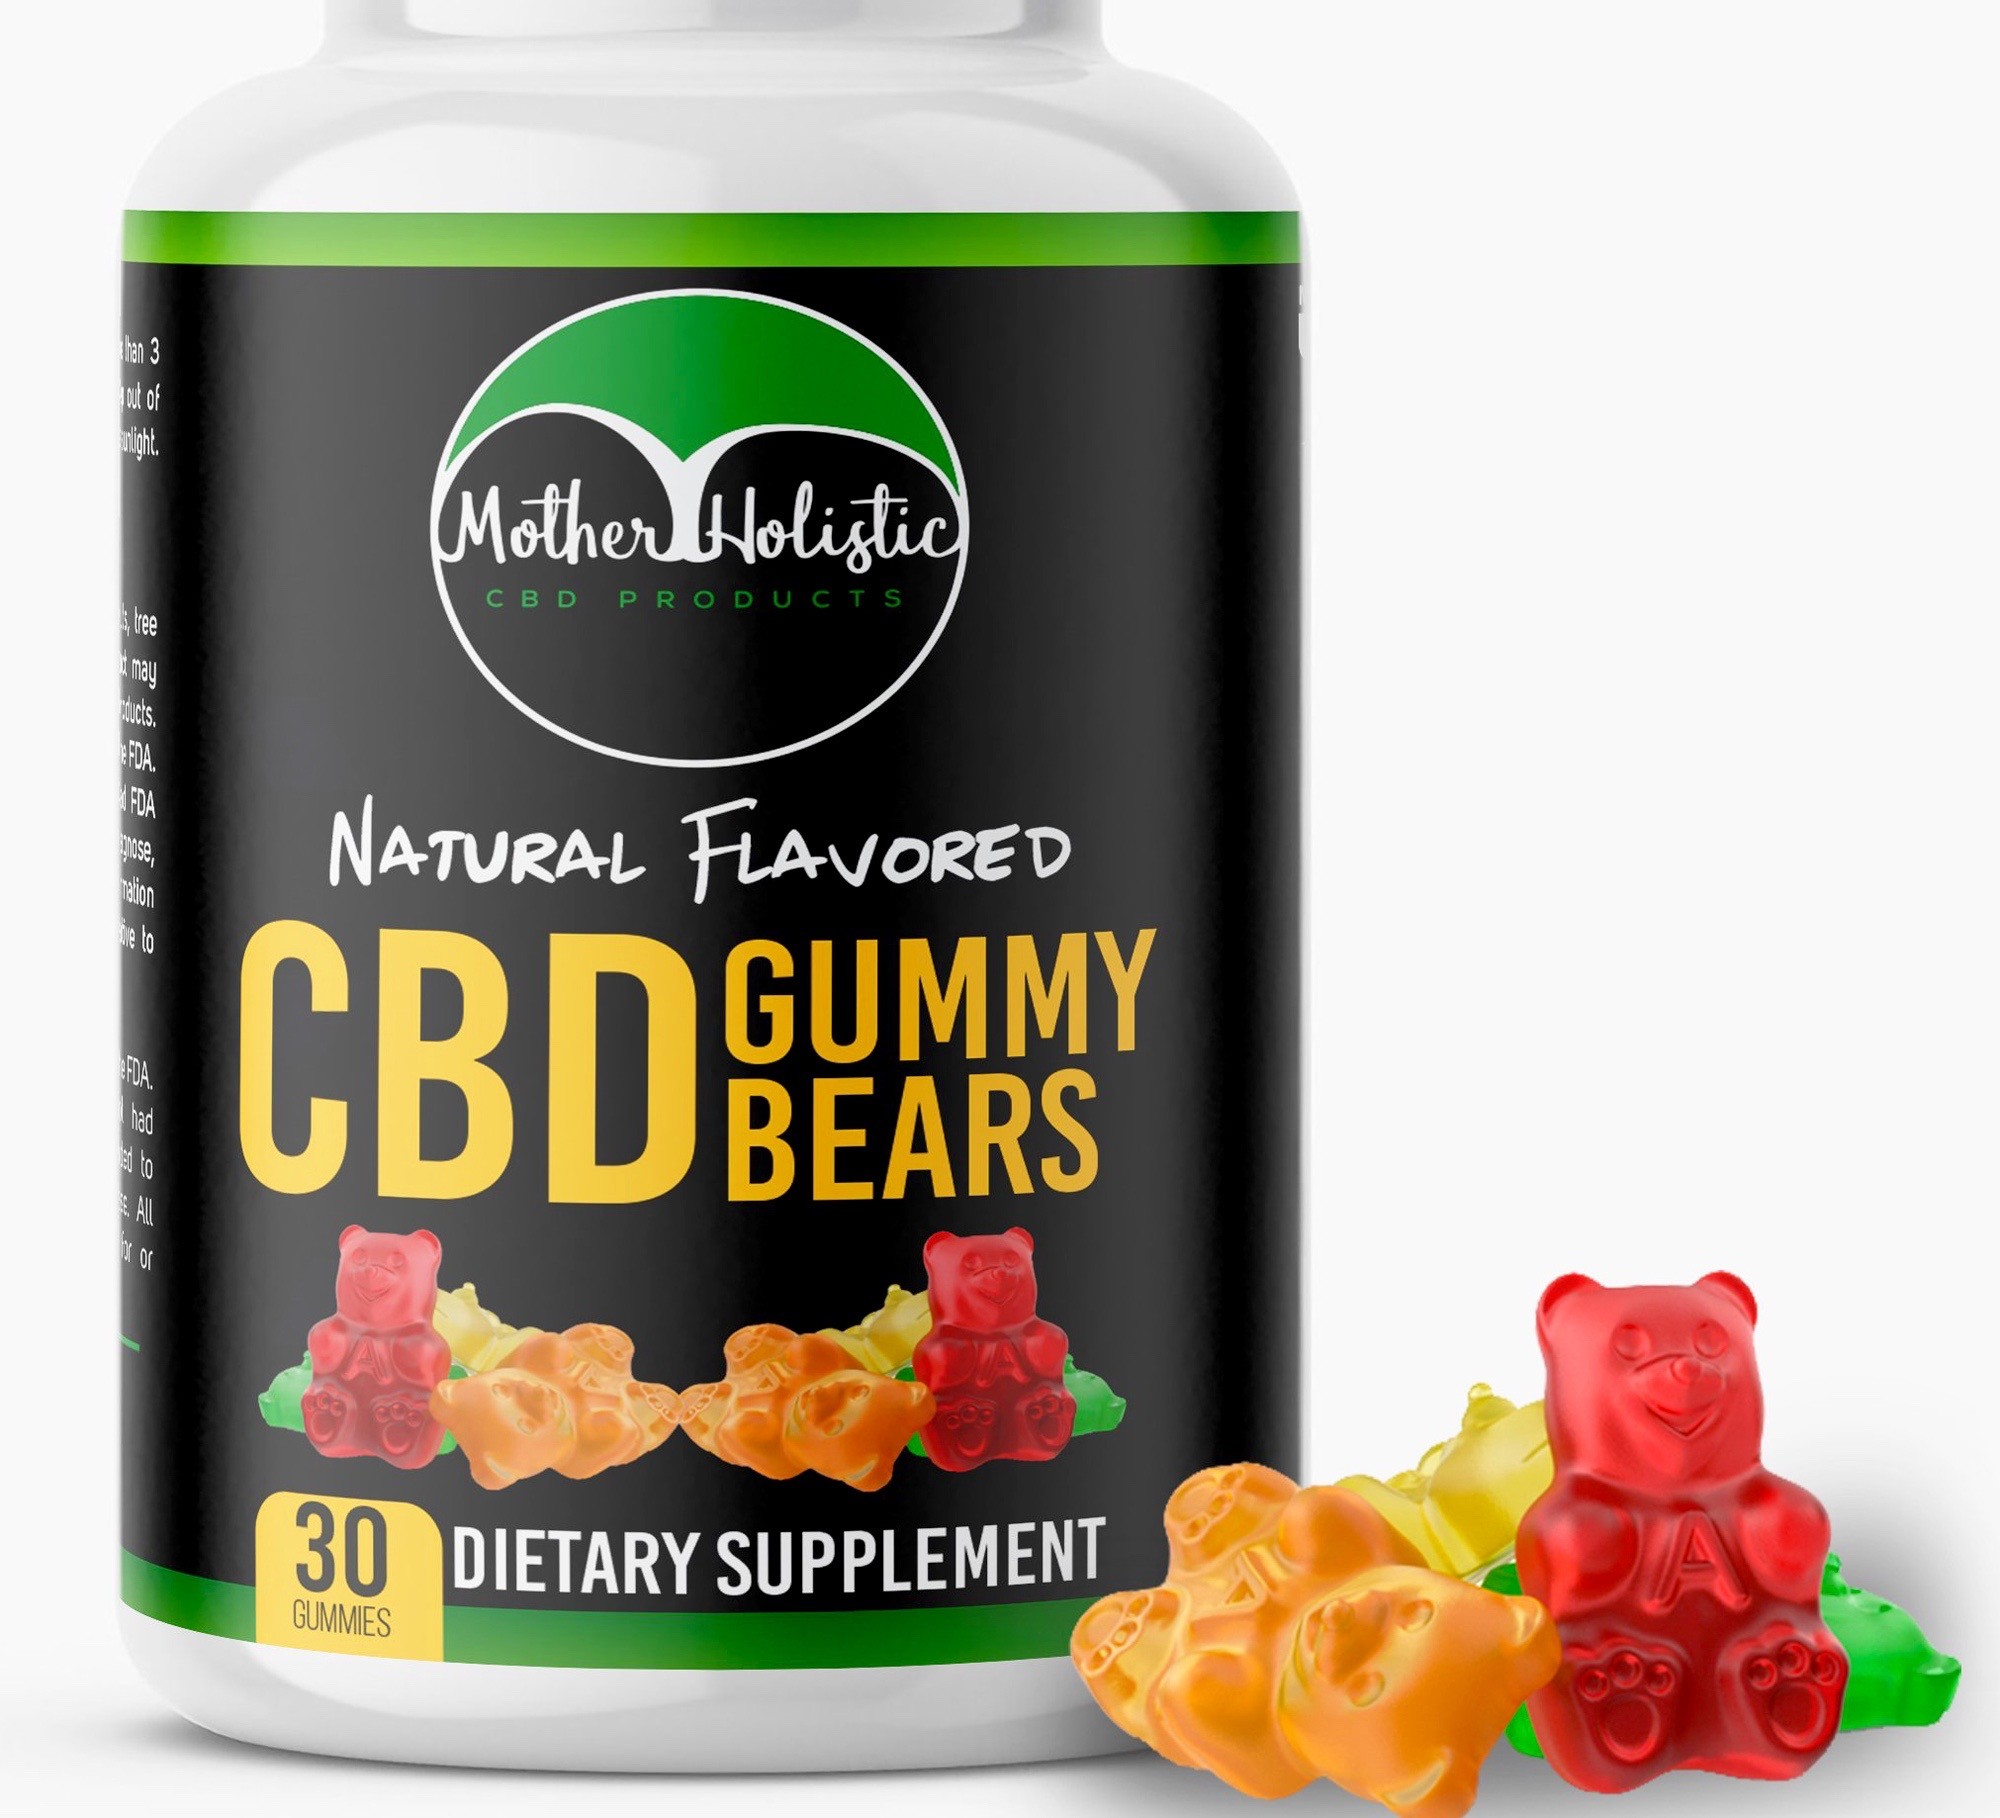 Cannabis Gummy Bears (Alle Fotos: Annick Stevenson)